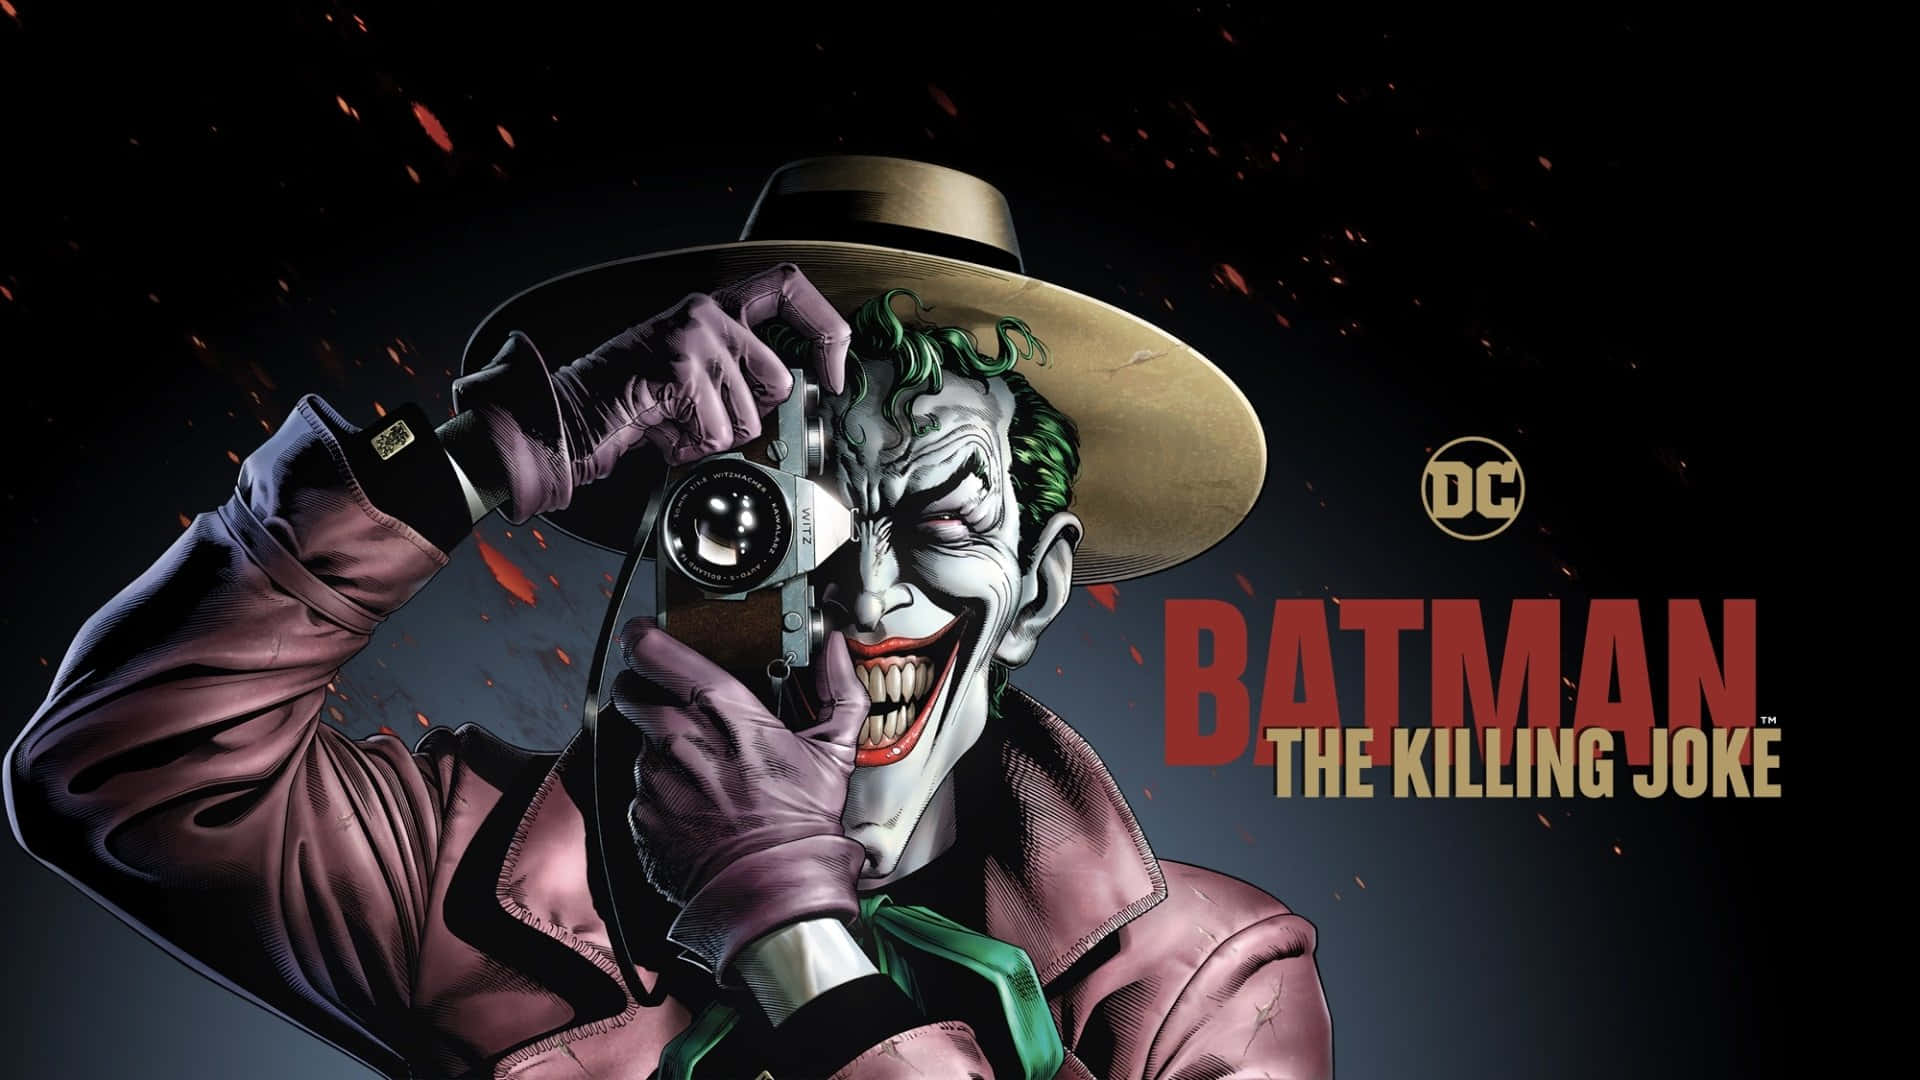 Intense Joker scene from Batman: The Killing Joke Wallpaper